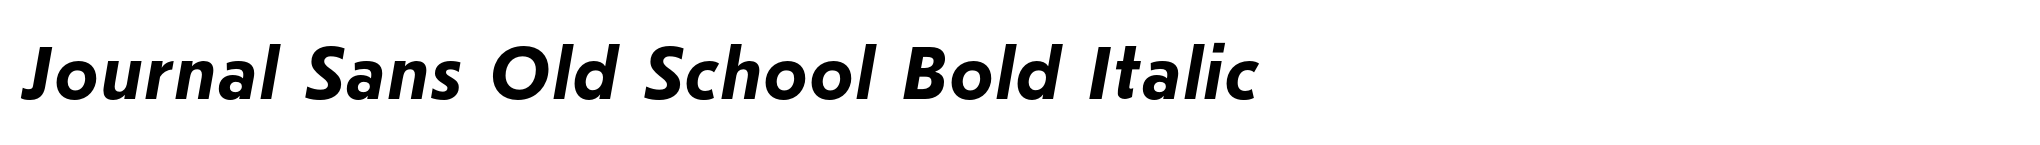 Journal Sans Old School Bold Italic image